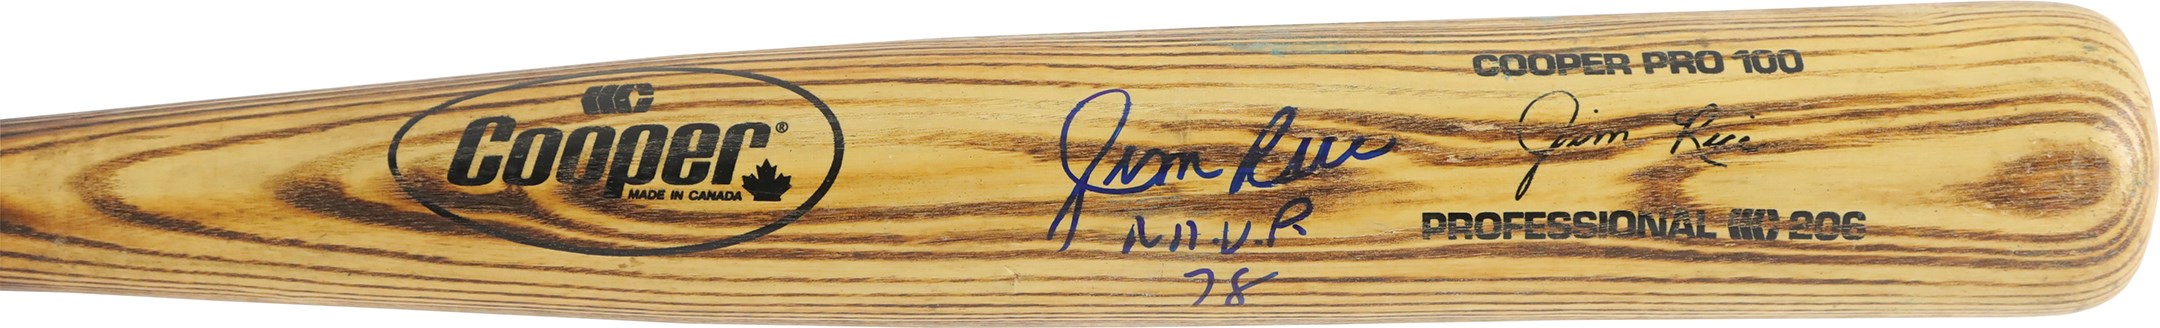 Baseball Equipment - Circa 1986 Jim Rice Autographed Bat Used by Don Baylor